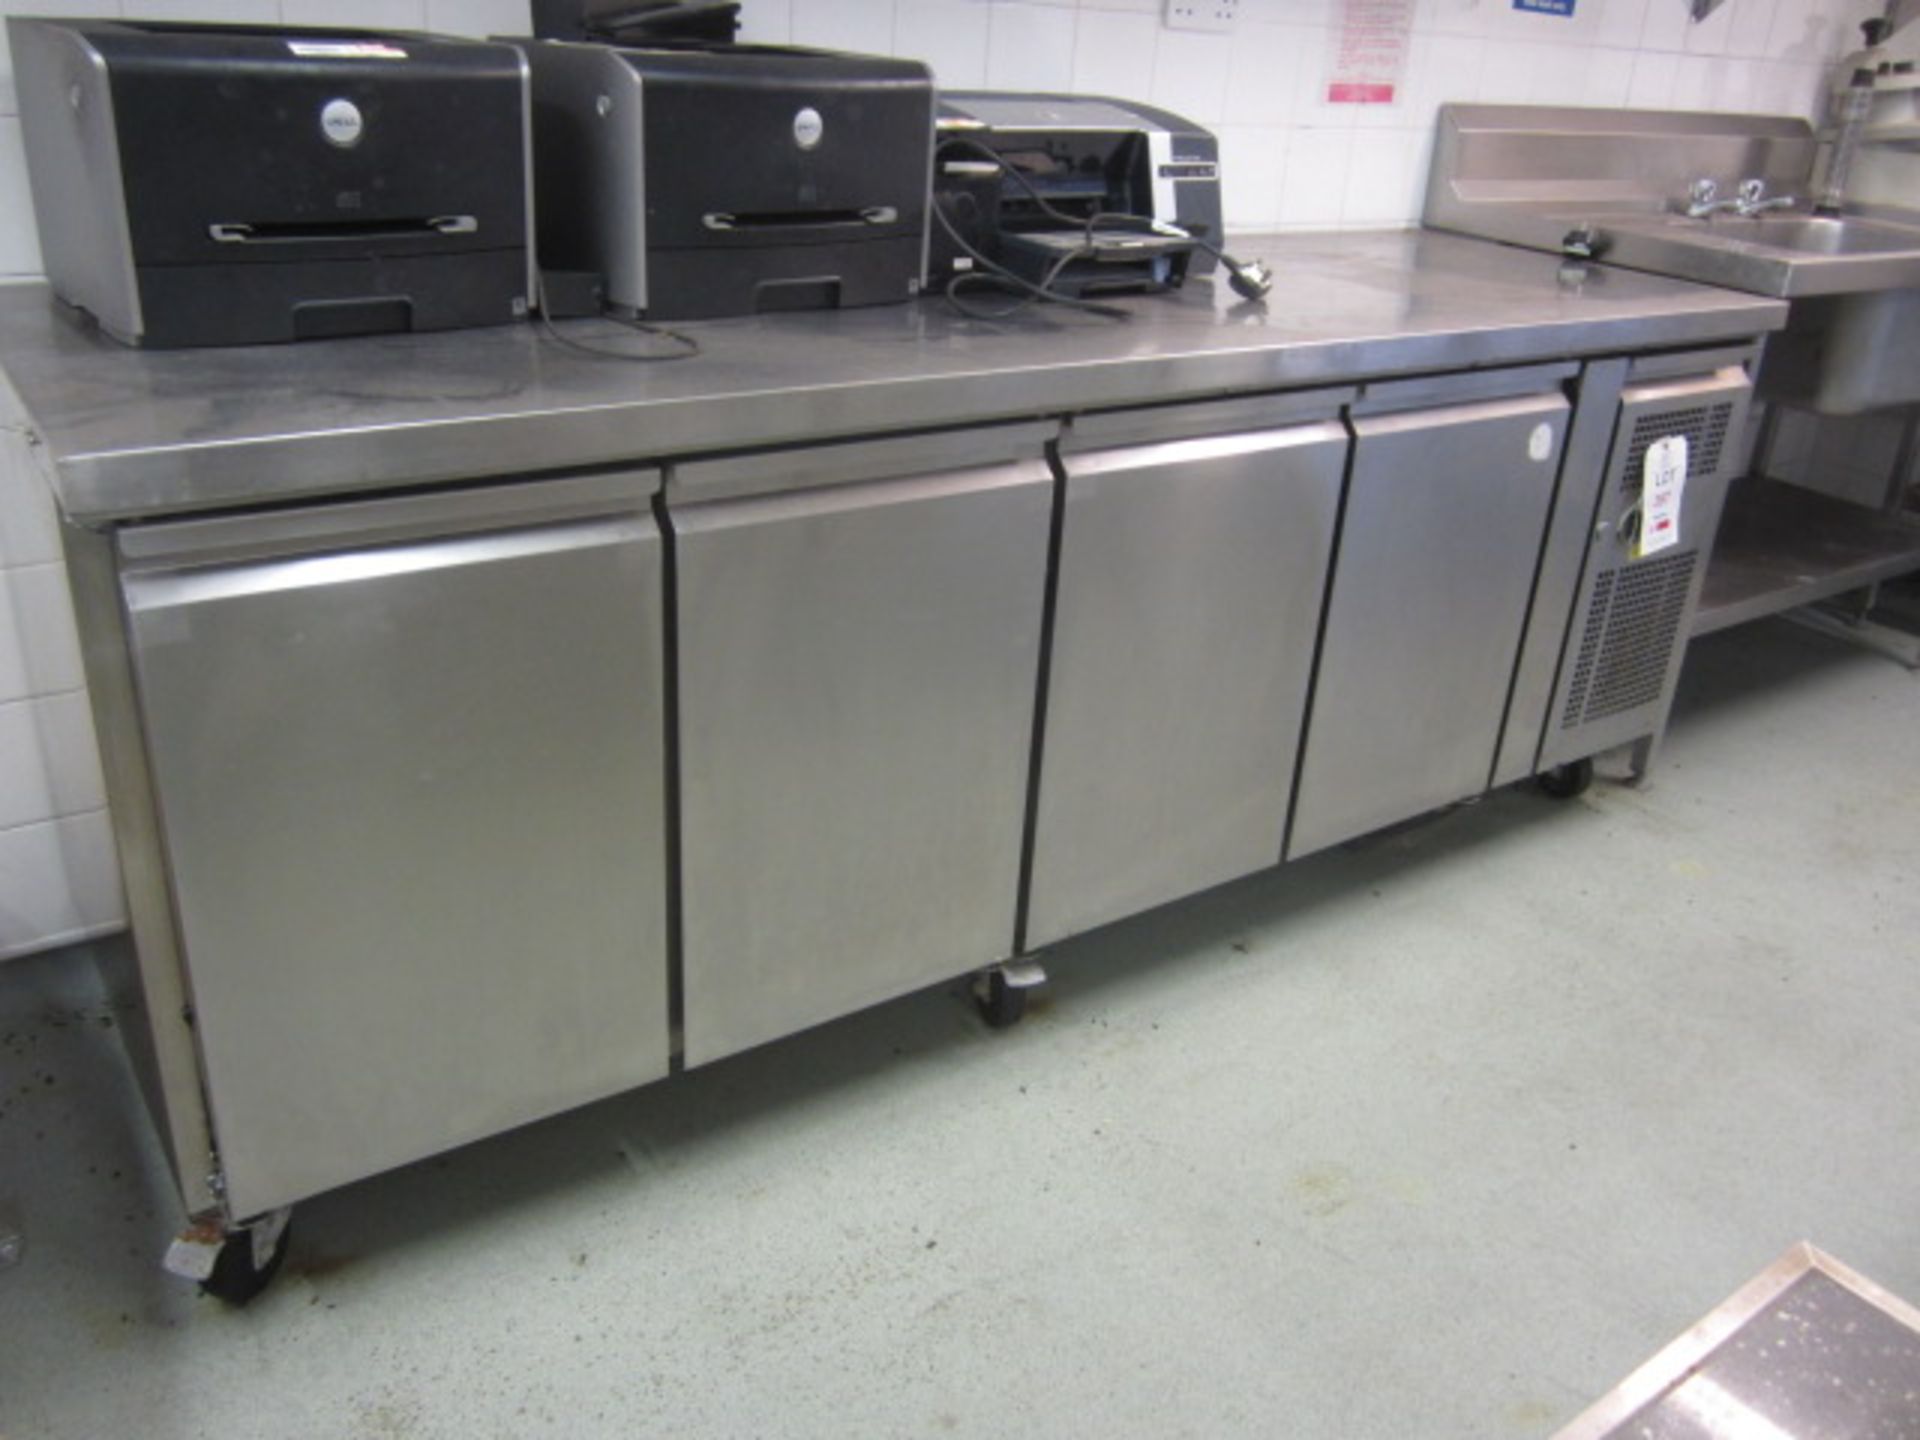 Unbadged stainless steel 4 door refrigerator with preparation worktop, 2230mm x 700mm x H850mm